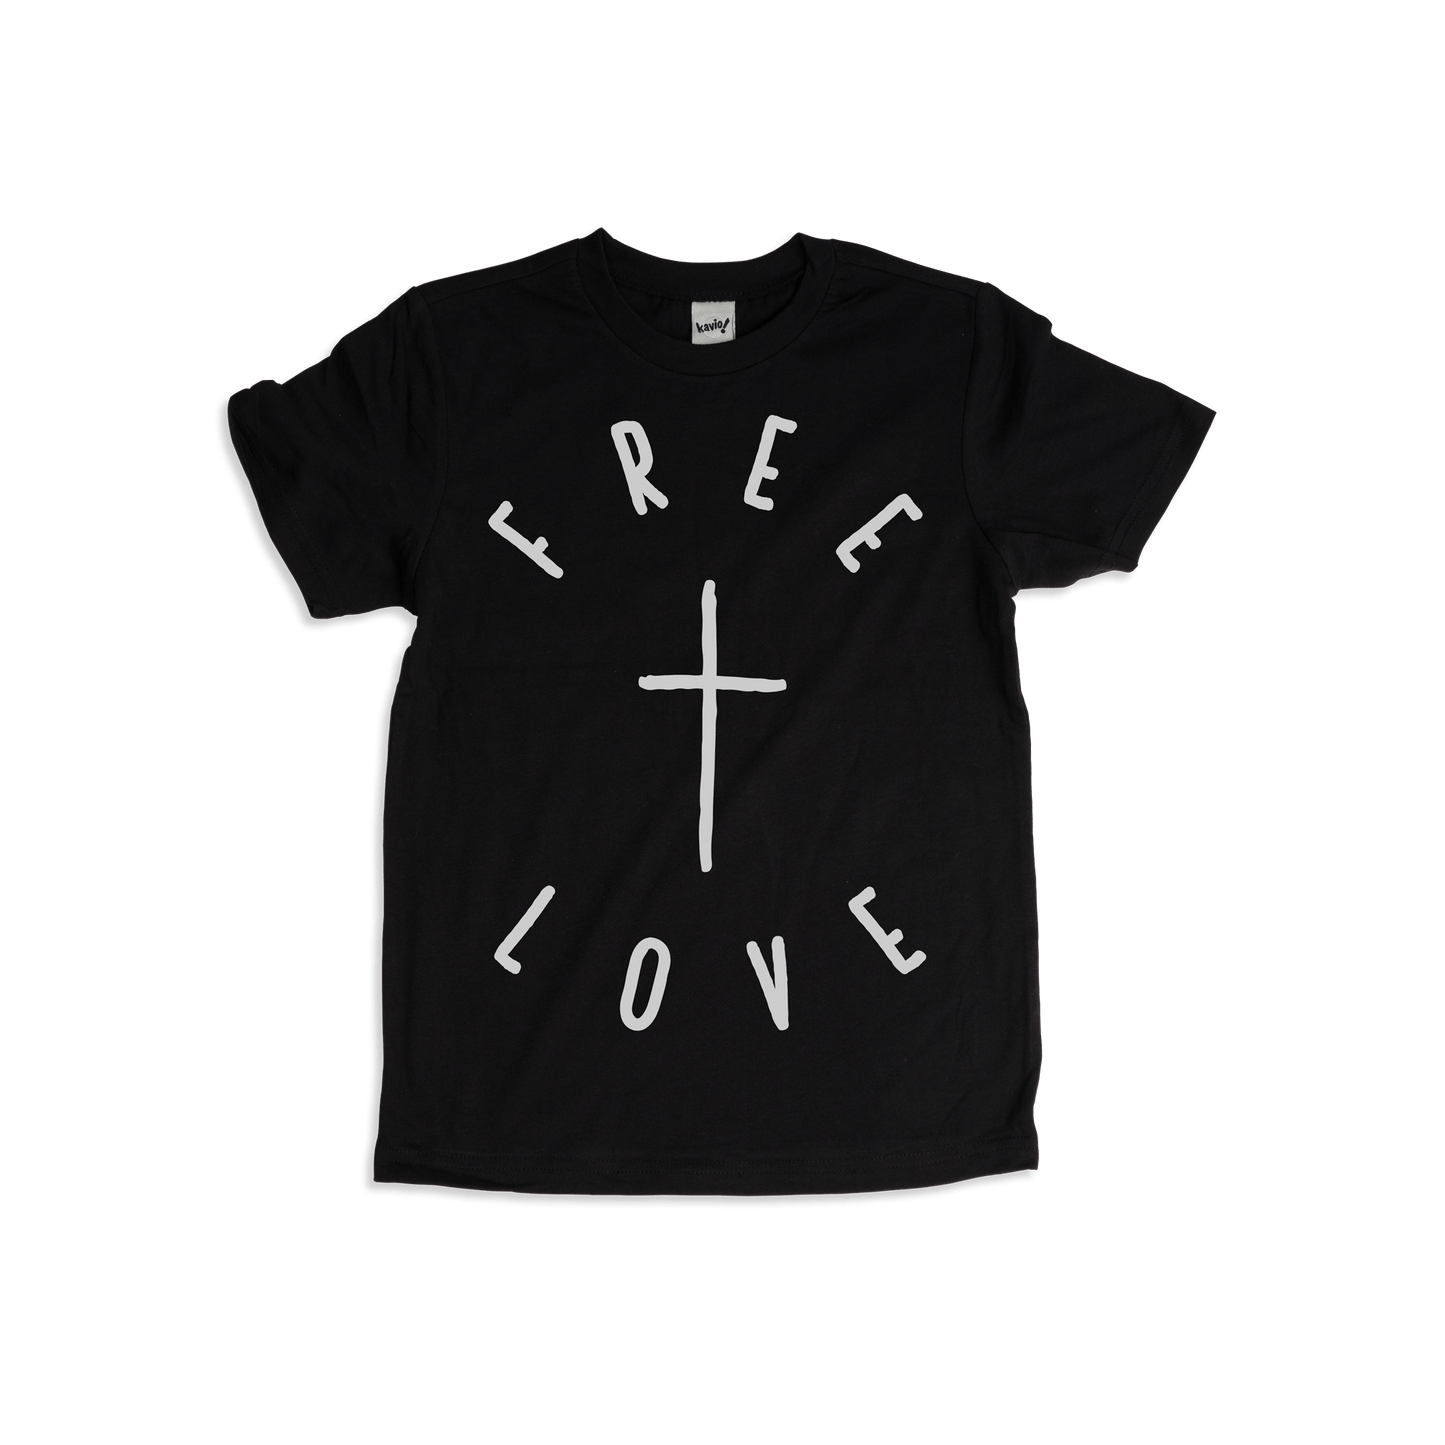 Free Love Kids T-shirt